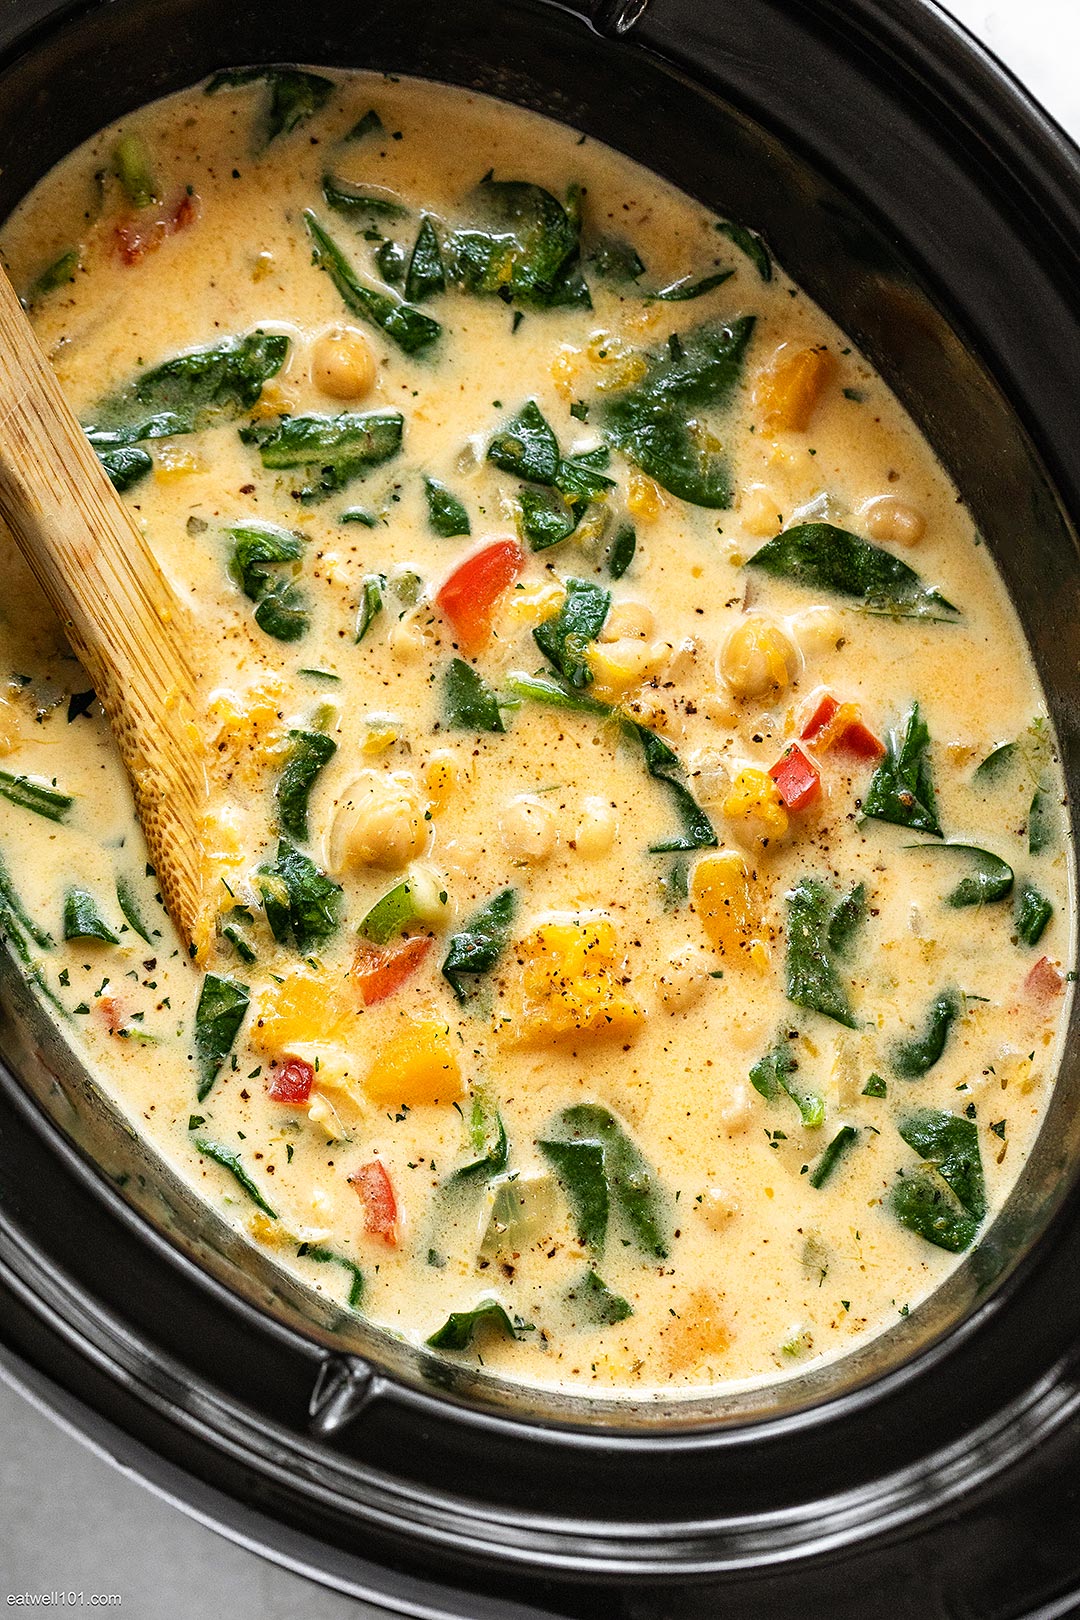 https://www.eatwell101.com/wp-content/uploads/2020/02/Slow-Cooker-Chickpea-Butternut-Soup-recipe-2.jpg